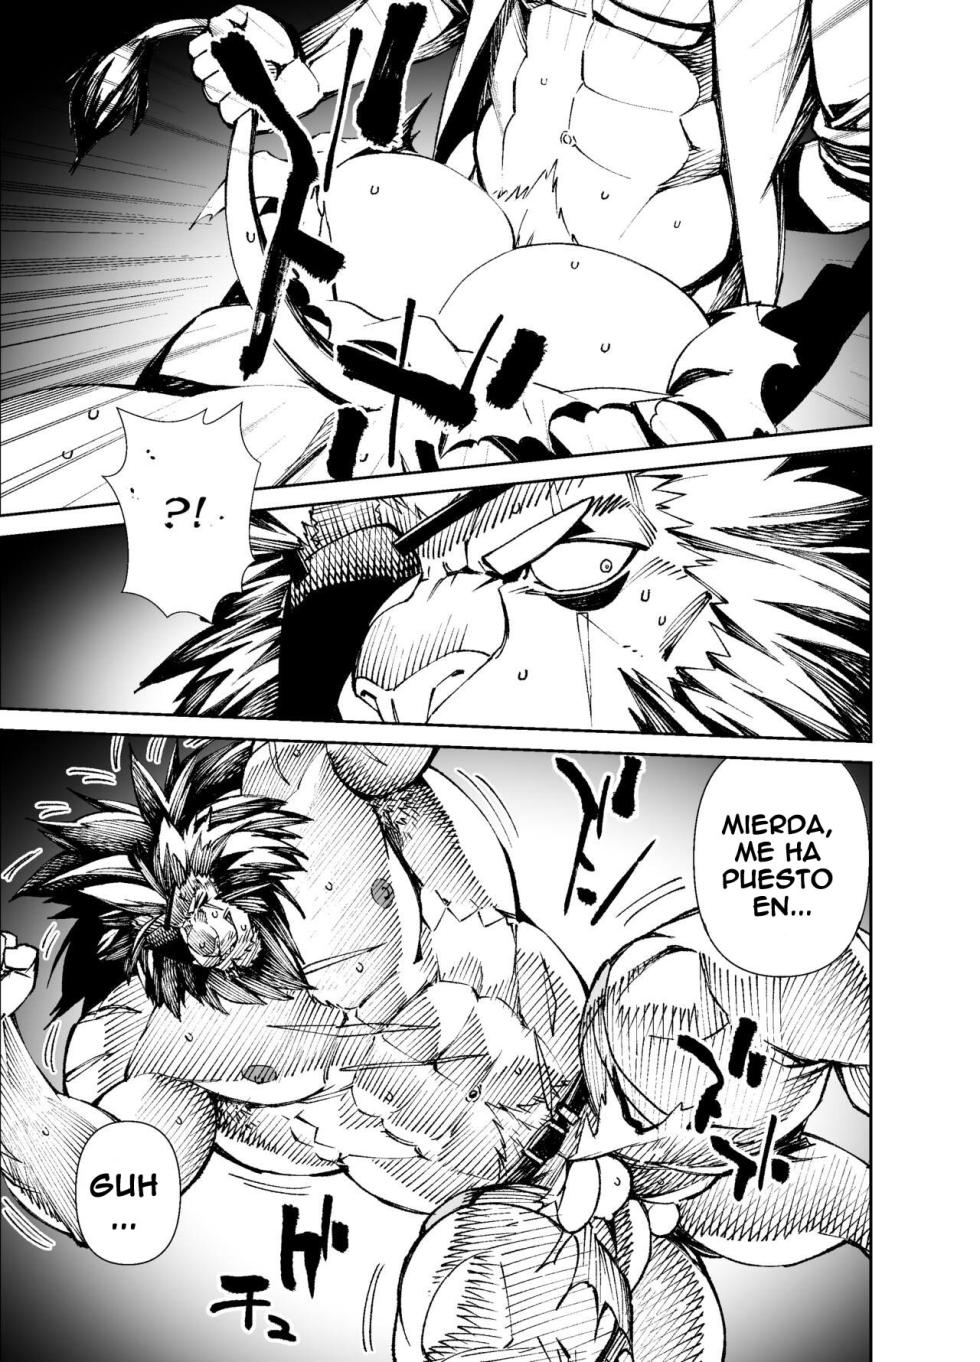 [Mennsuke] Manga 02 - Parts 1 to 8 [Español] (Ongoing) - Page 16